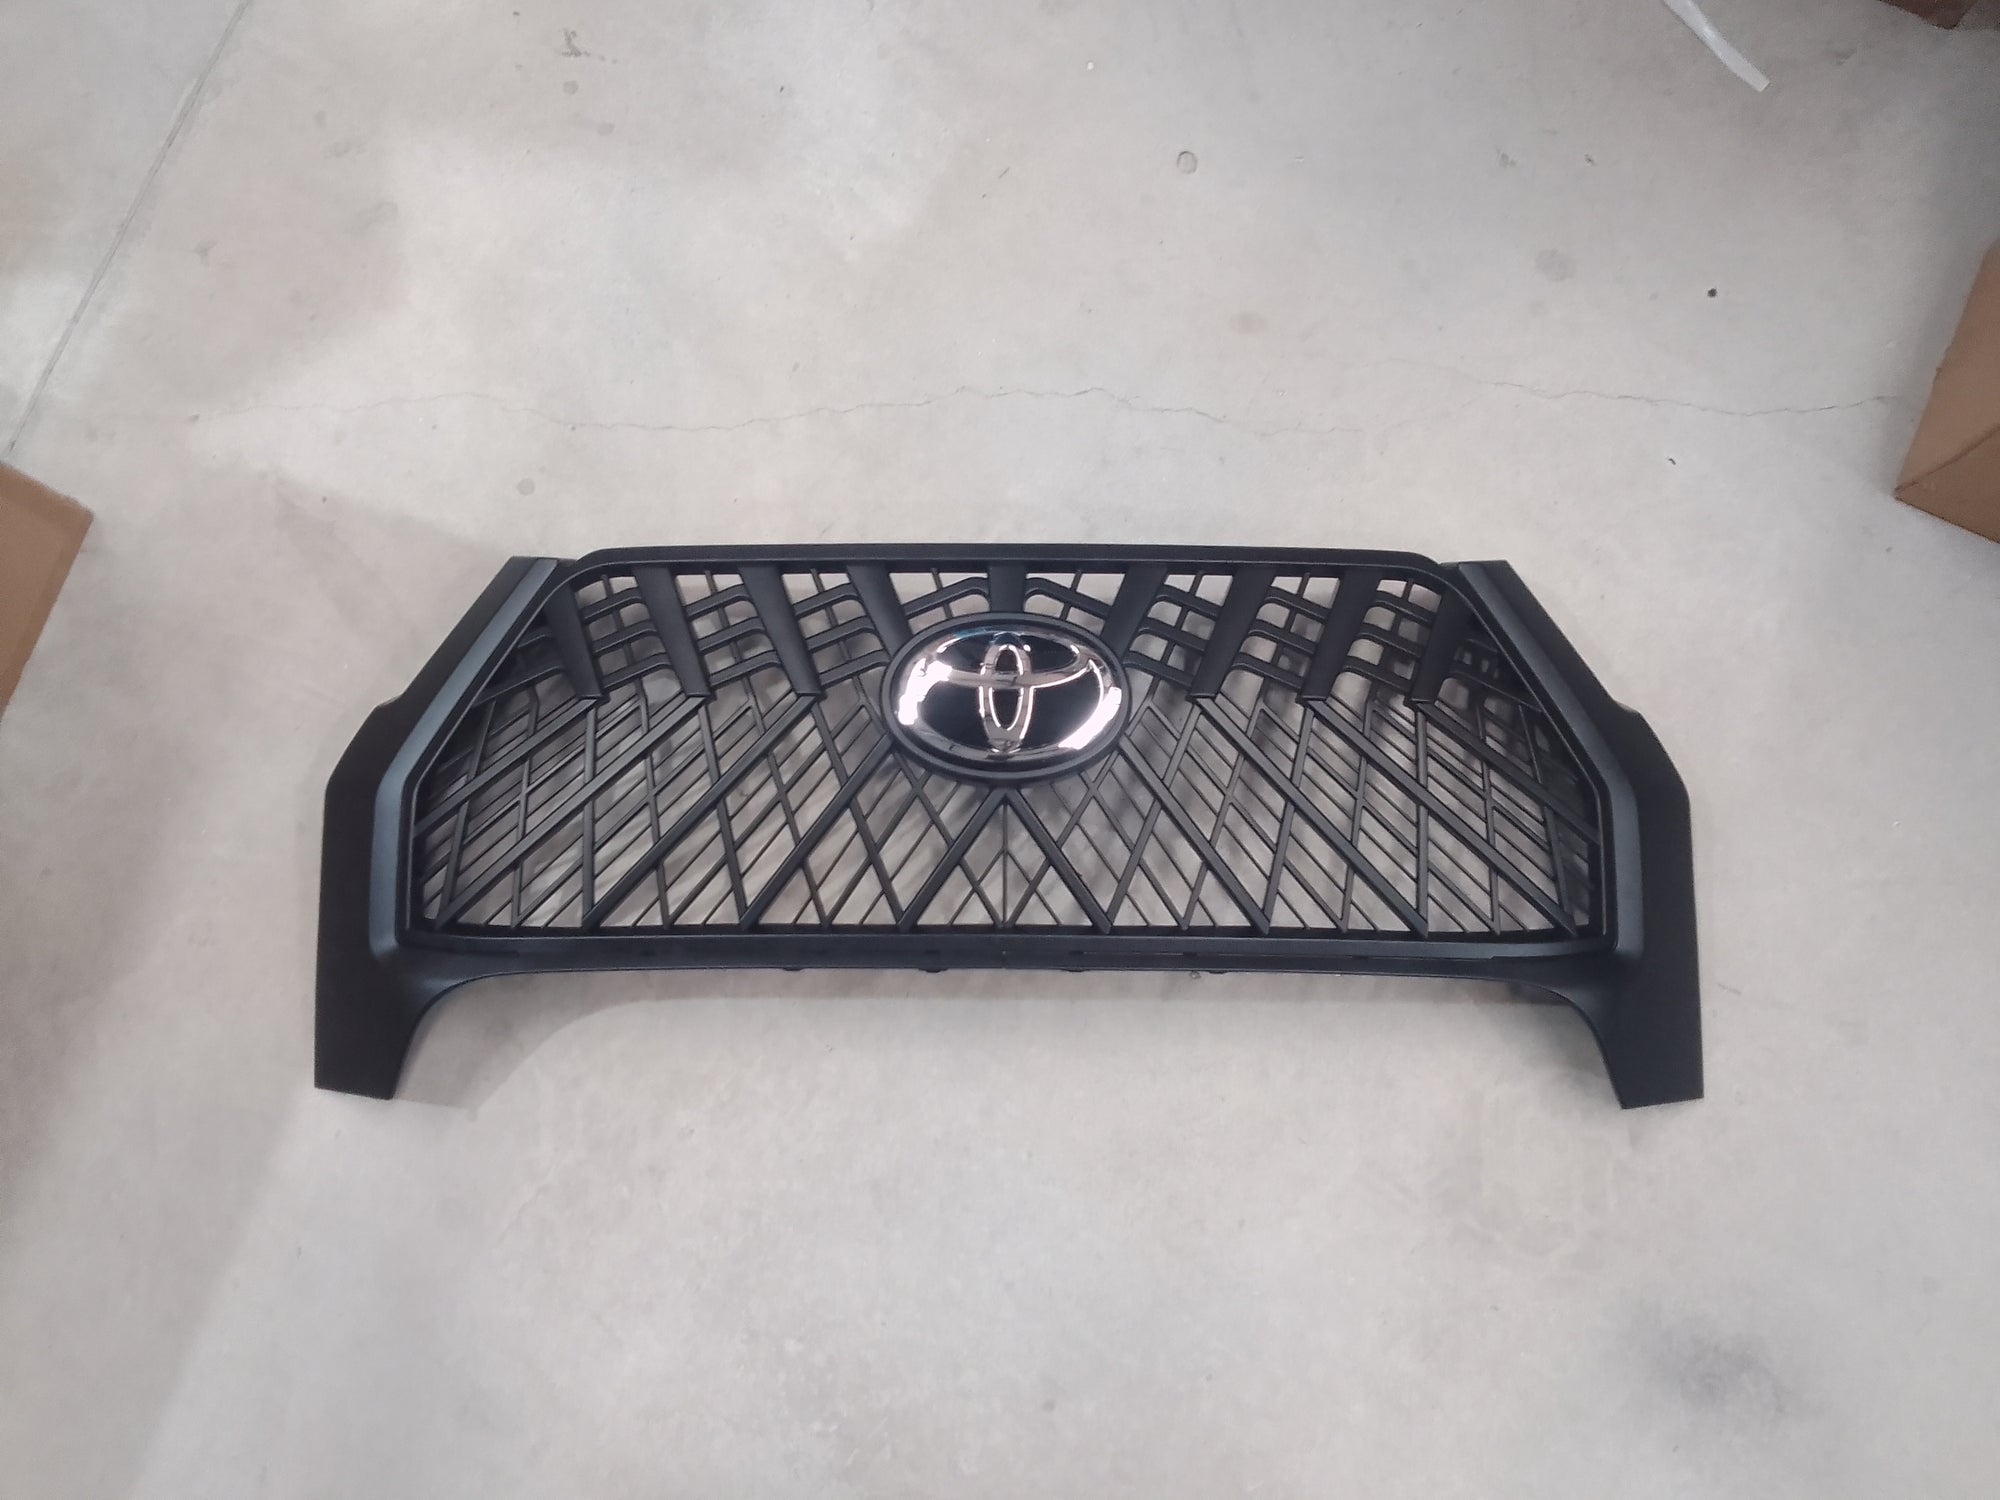 Toyota Hilux 2021 Legend spec Lexus style grill (matt black) badge not included